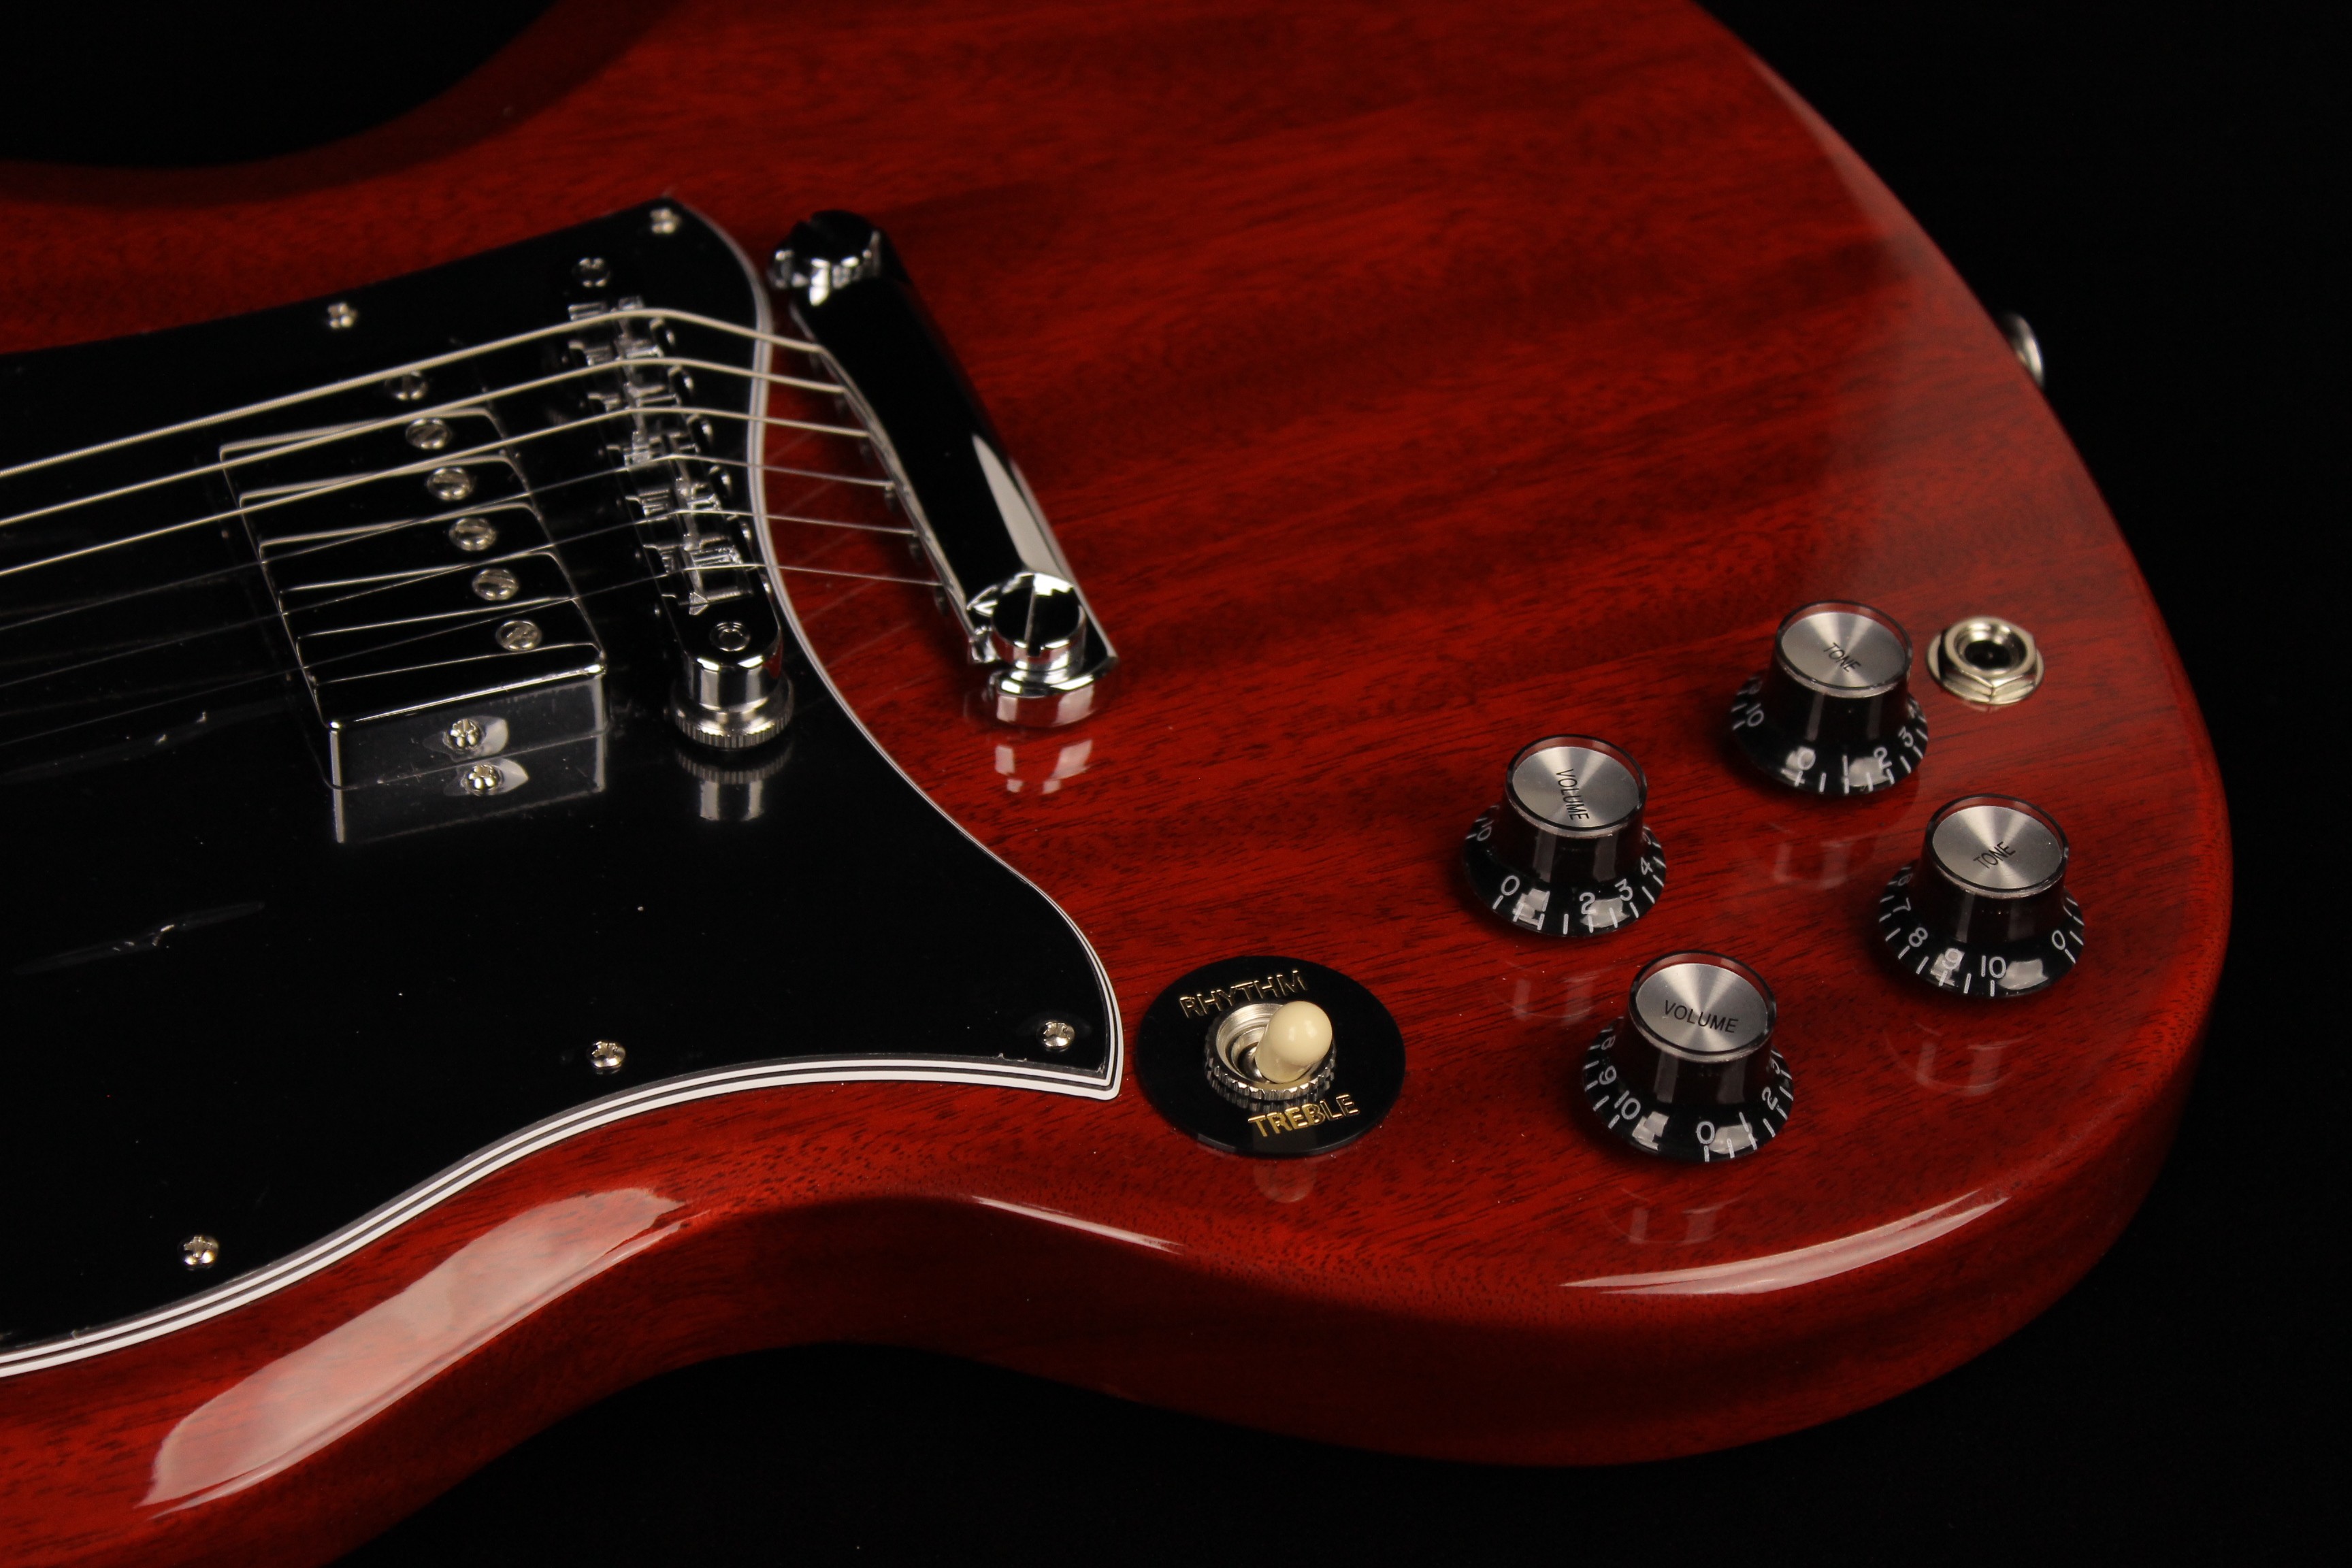 Gibson SG Standard Left Handed Heritage Cherry (SN: 221630197 